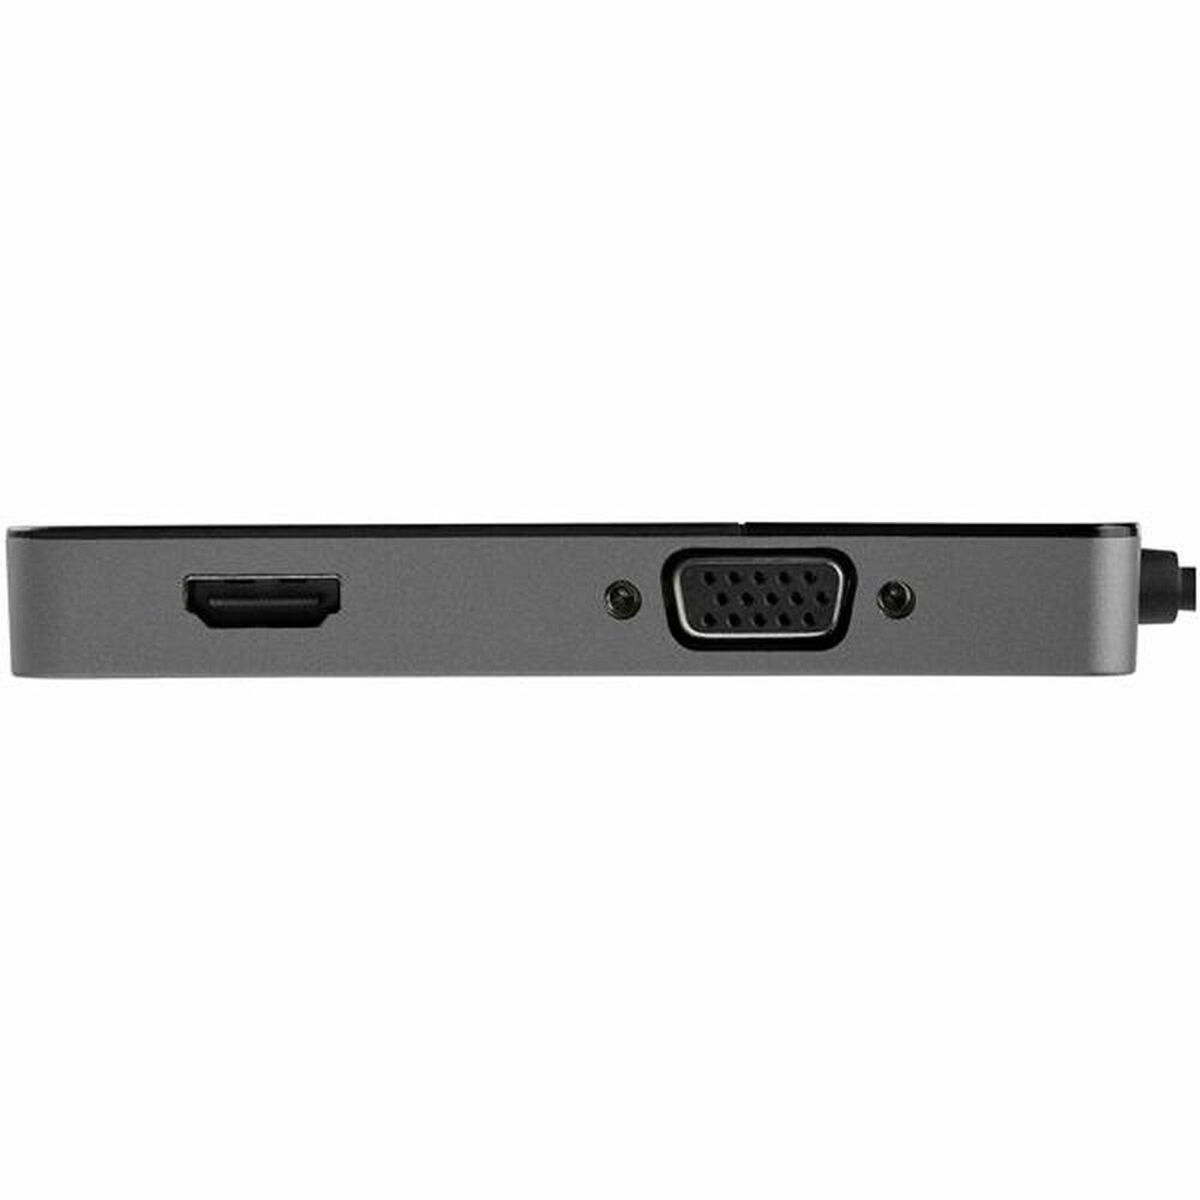 USB-zu-VGA/HDMI-Adapter Startech USB32HDVGA Schwarz 4K Ultra HD